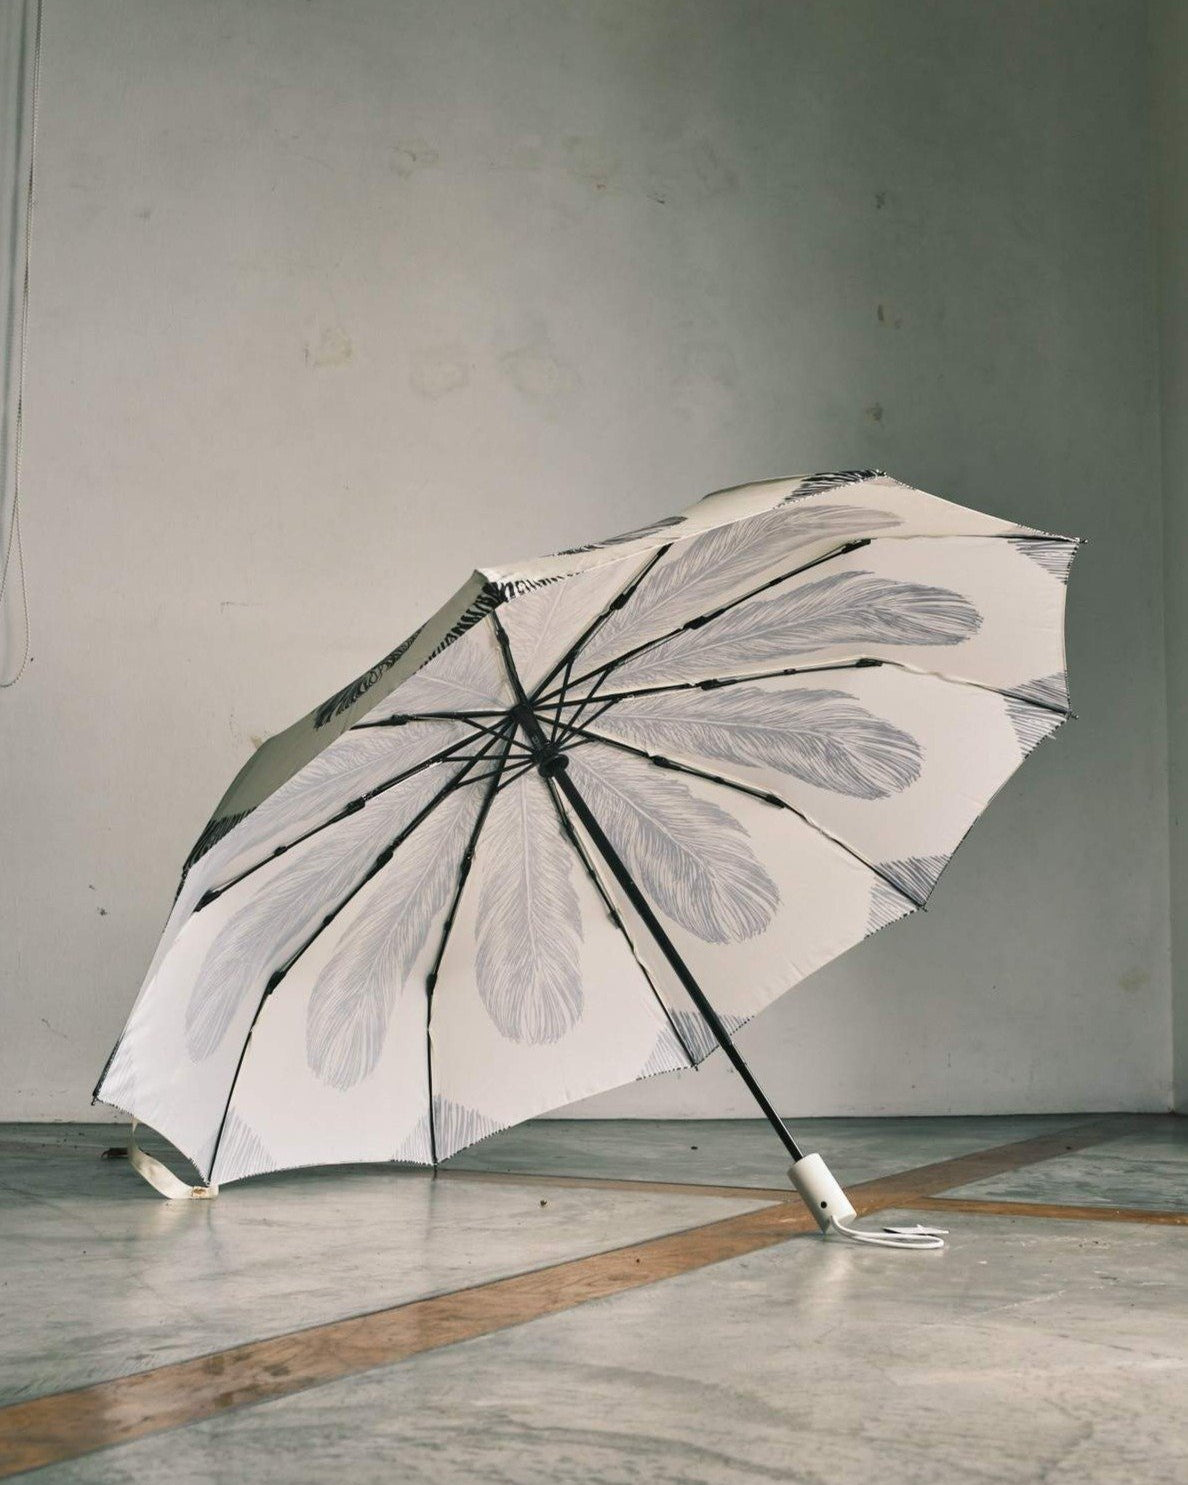 After Rain - Foldable Umbrella